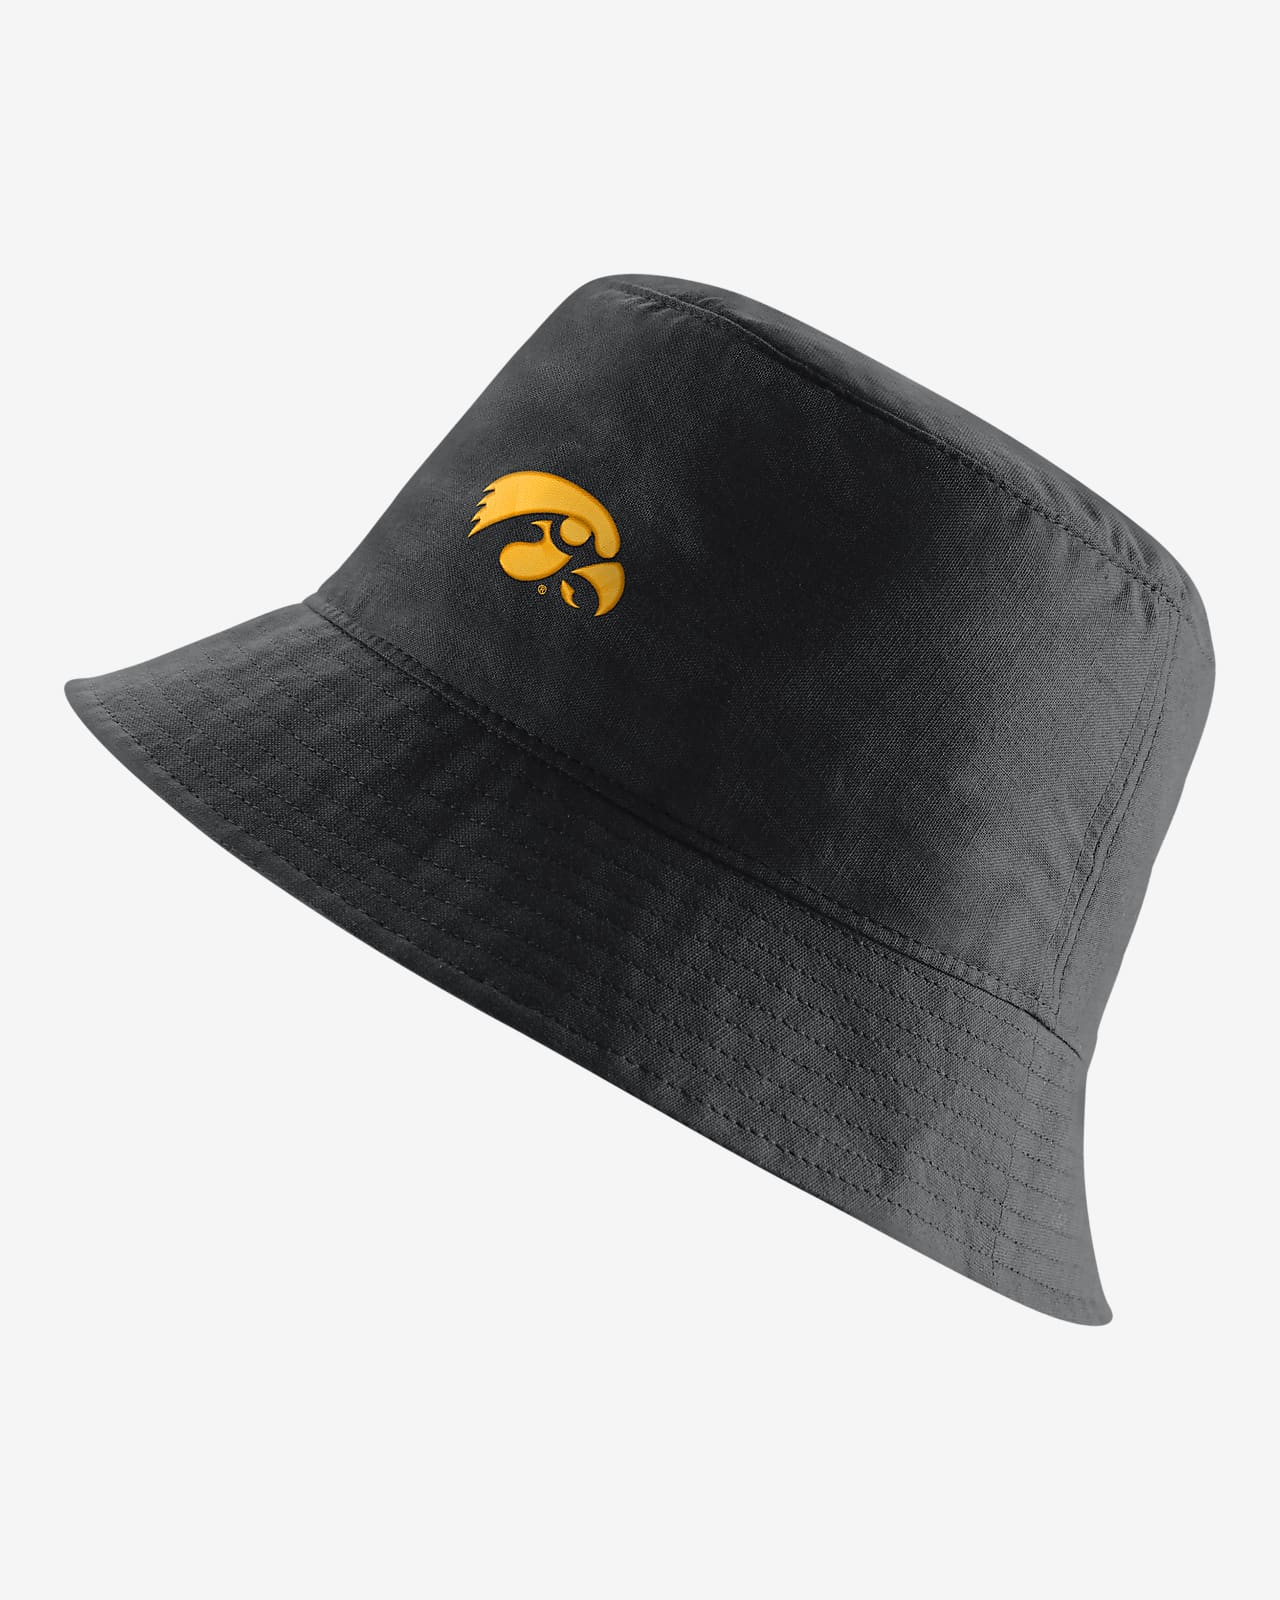 Nike College (Iowa) Bucket Hat